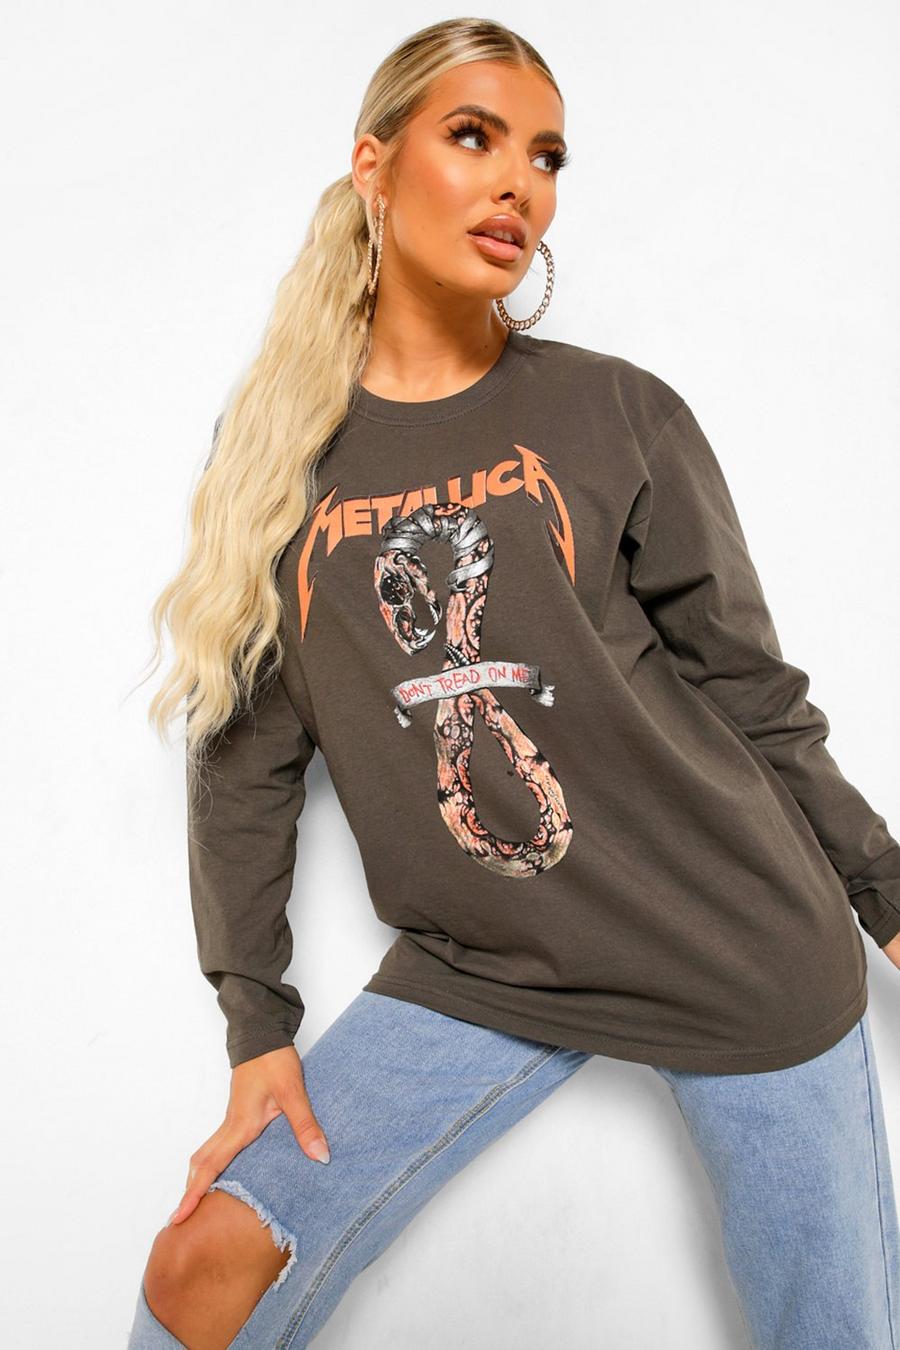 Charcoal grey Långärmad t-shirt med Metallica-tryck